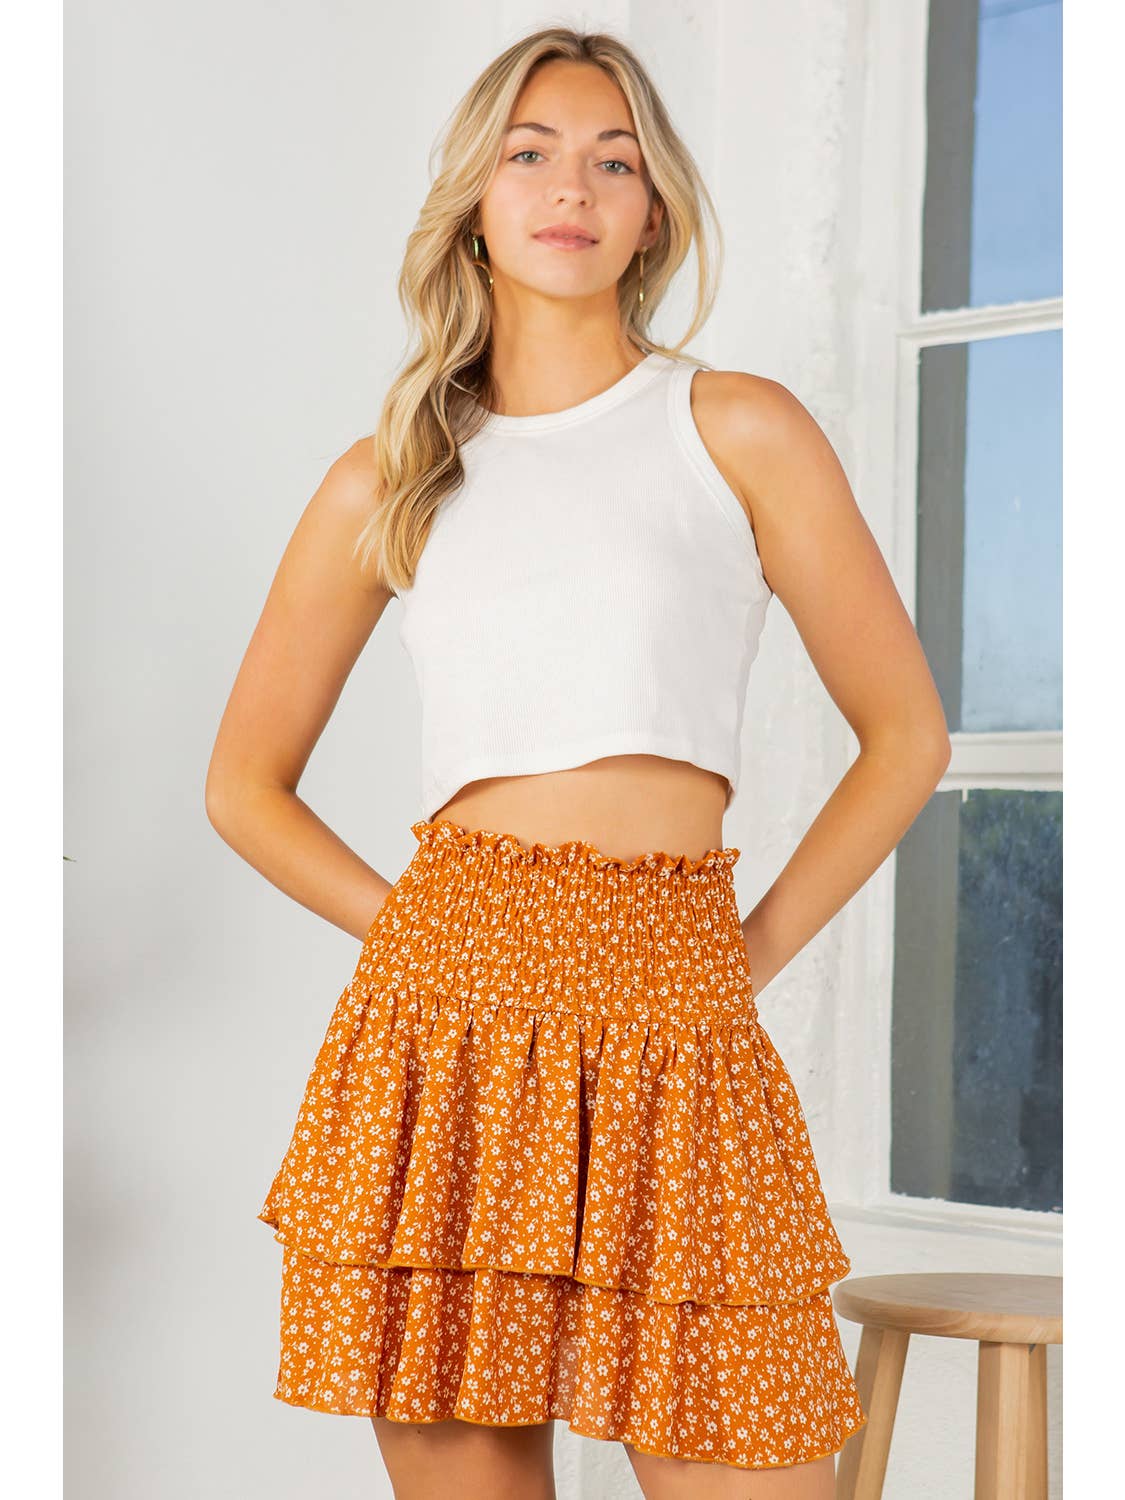 Smocked Tiered Layered Skirt - Storm and Sky Shoppe - Orange Farm Clothing